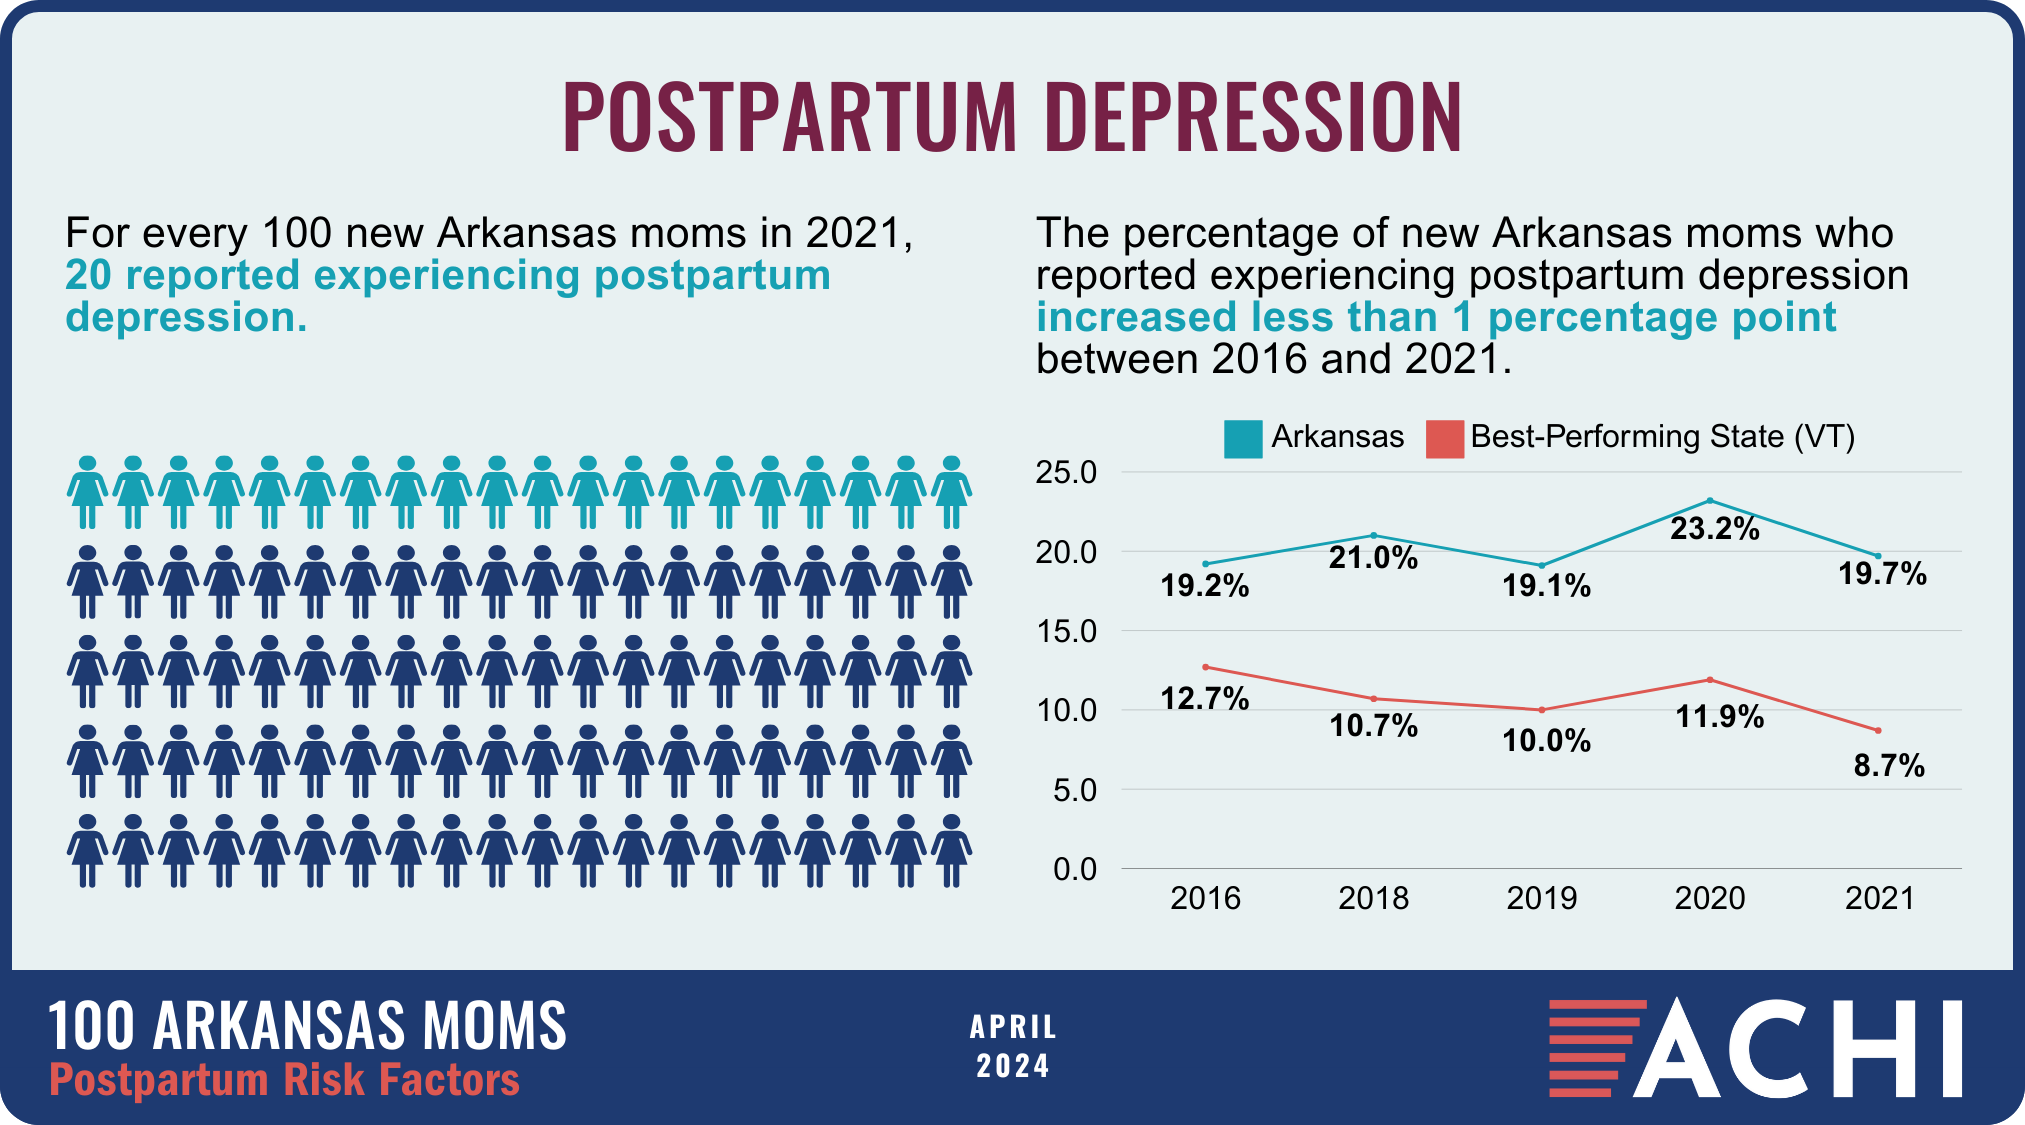 22_240418_100 Arkansas Moms_Postpartum Risk Factors_Depression